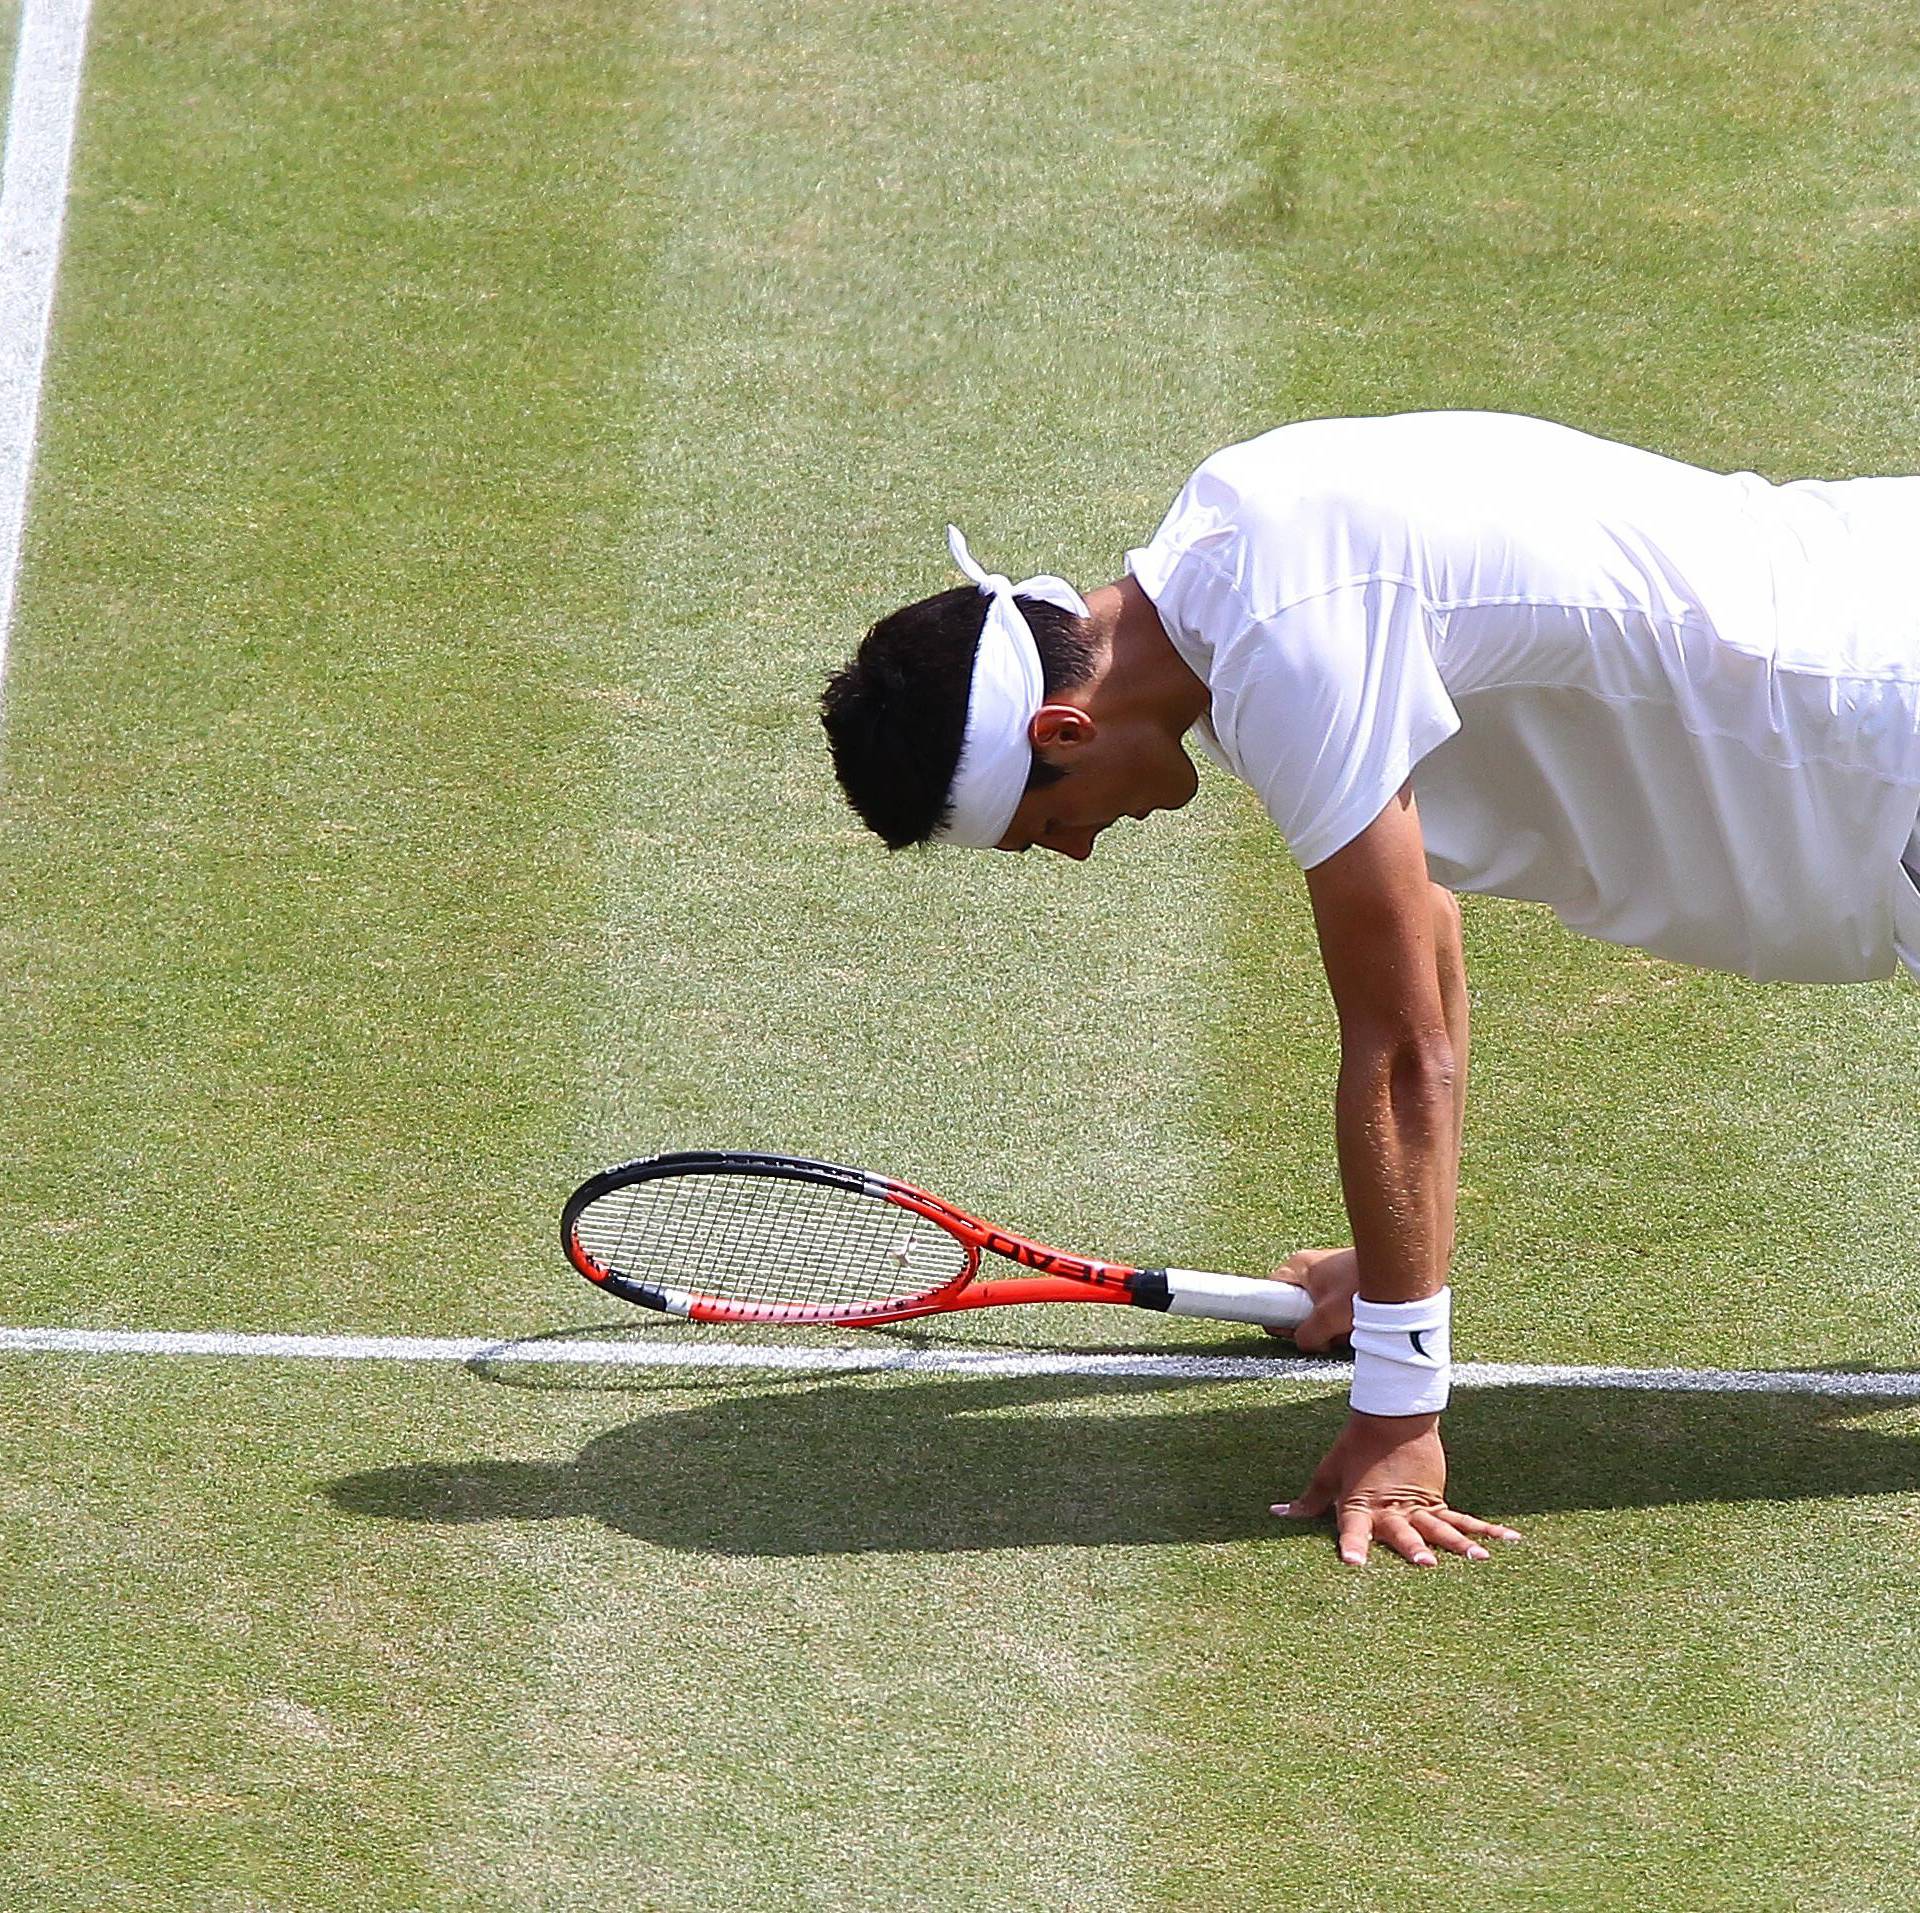 Wimbledon 2011 Novak Djokovic (SRB) during the quater final game against Bernard Tomic (AUS)